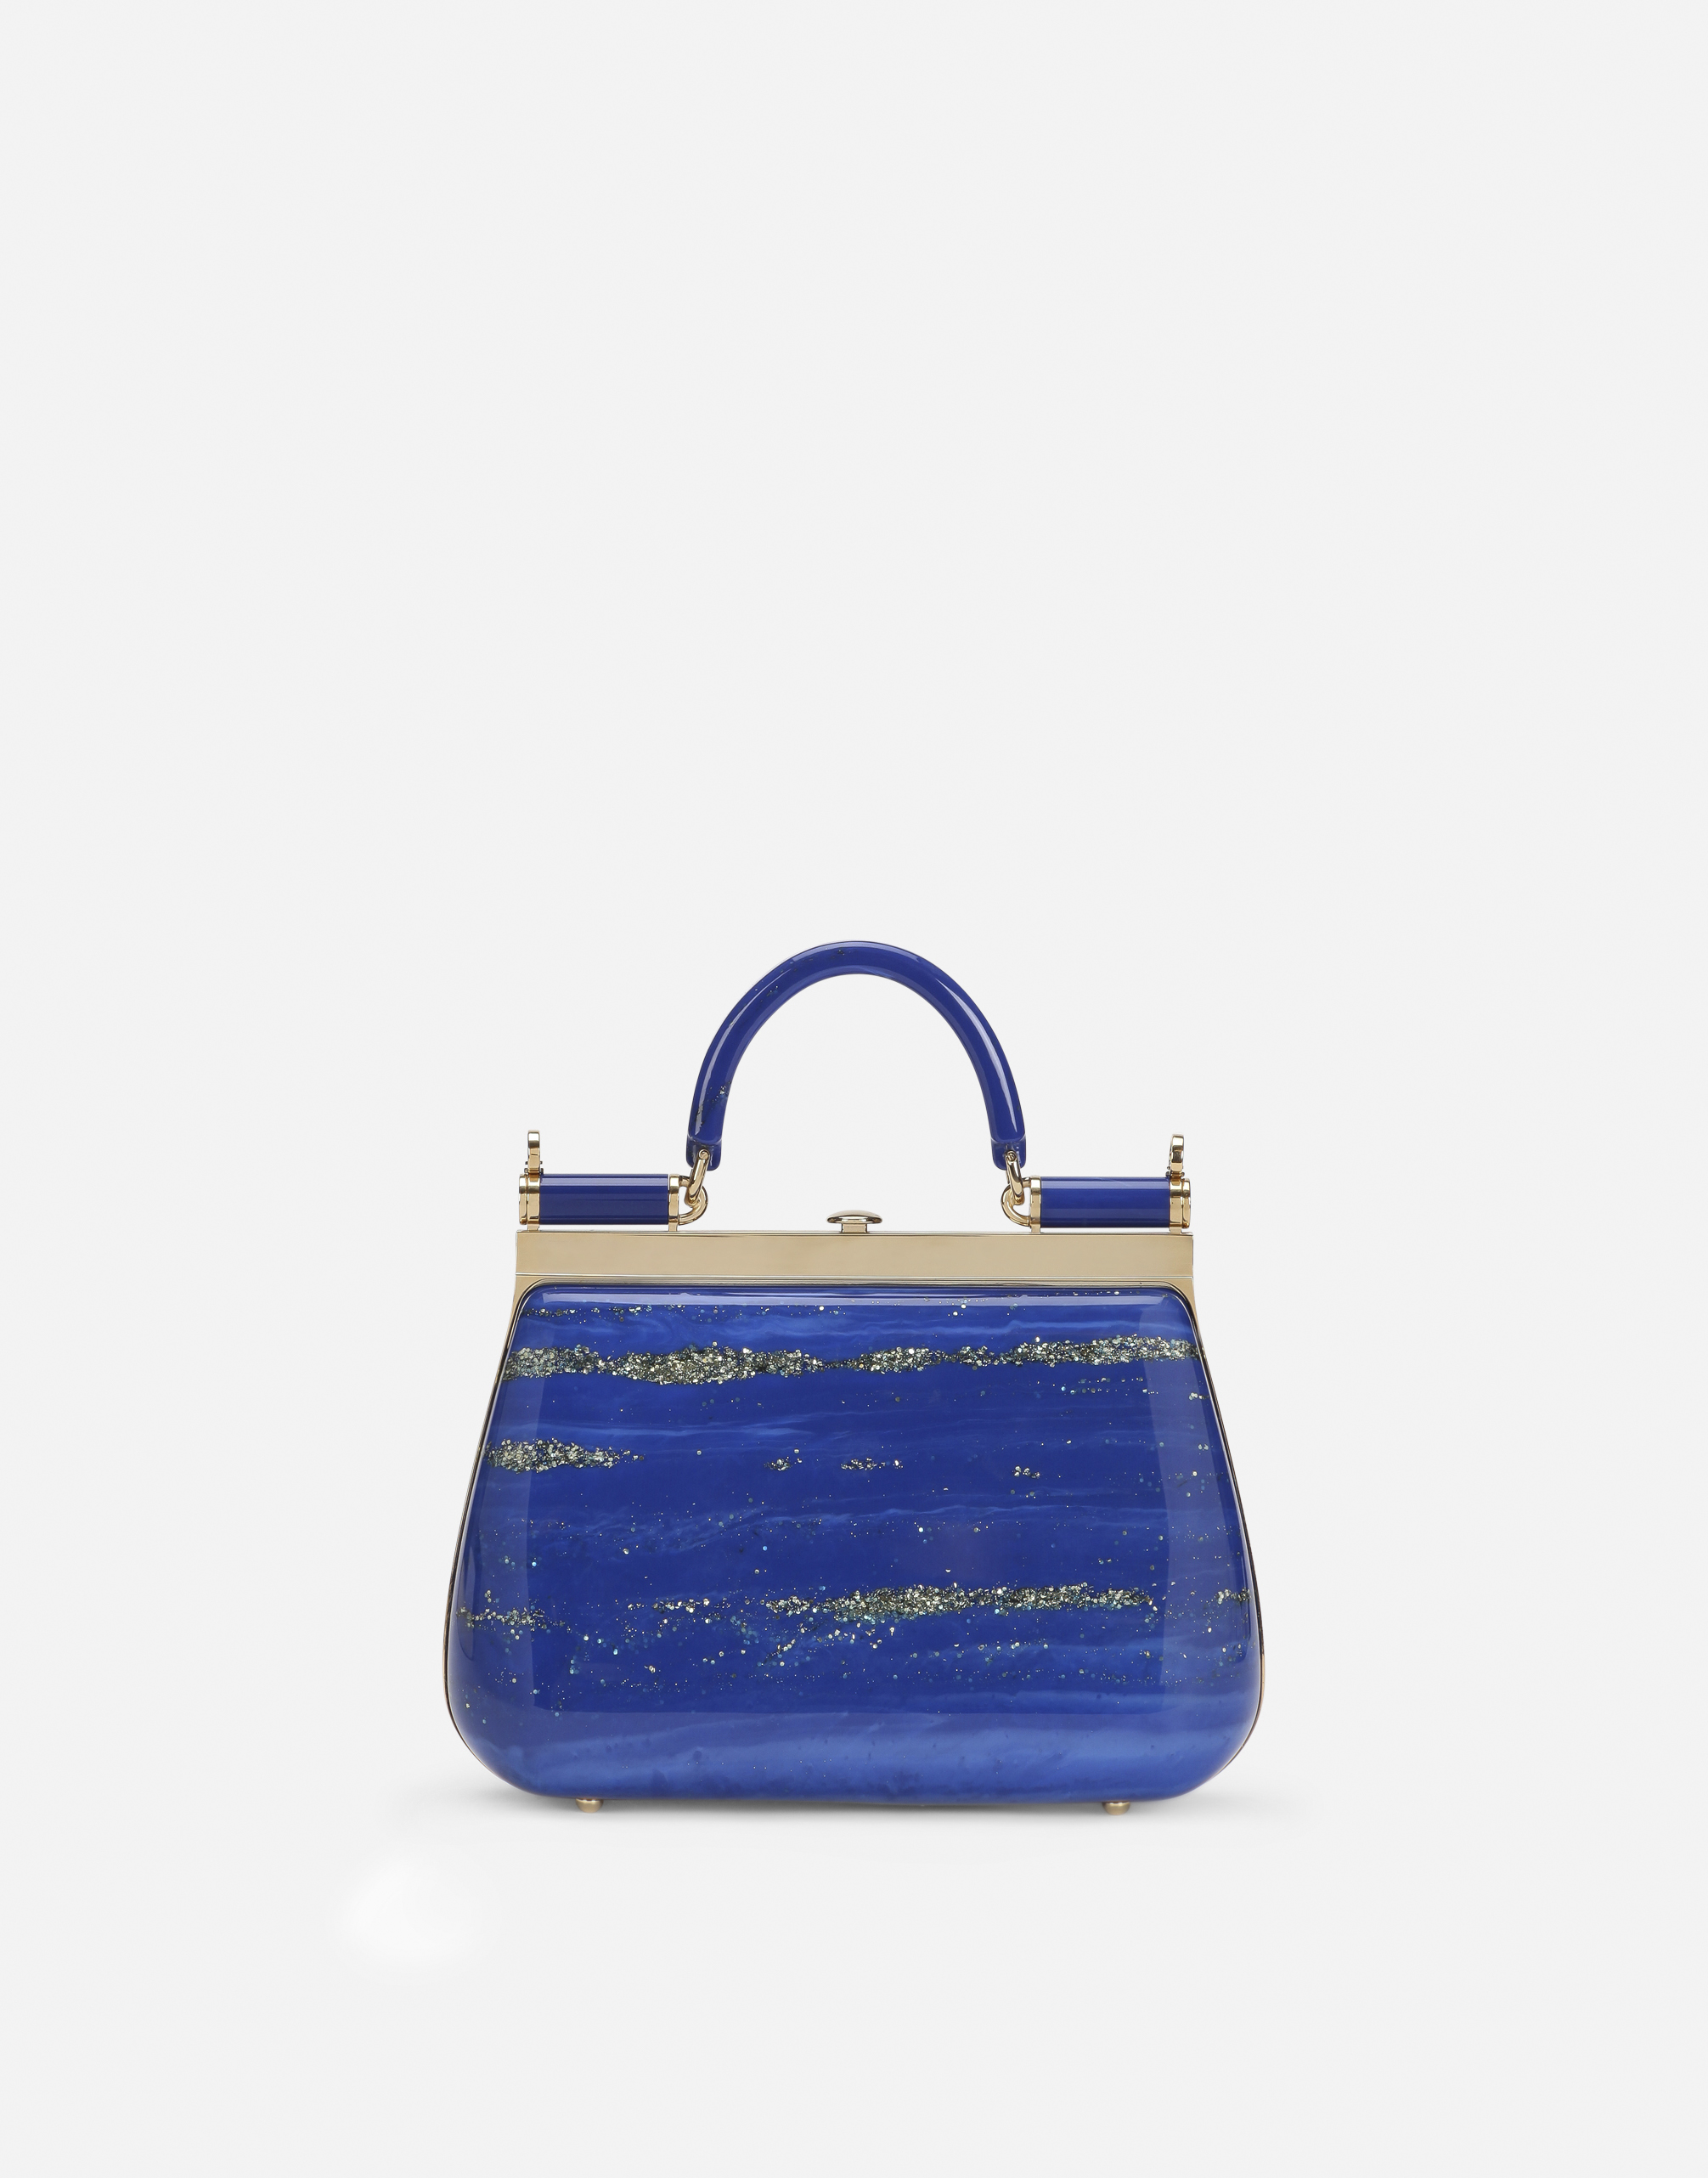 The Stunning Sicily Box Bag in Acrylic Glass from Dolce & Gabbana -  SeaChange